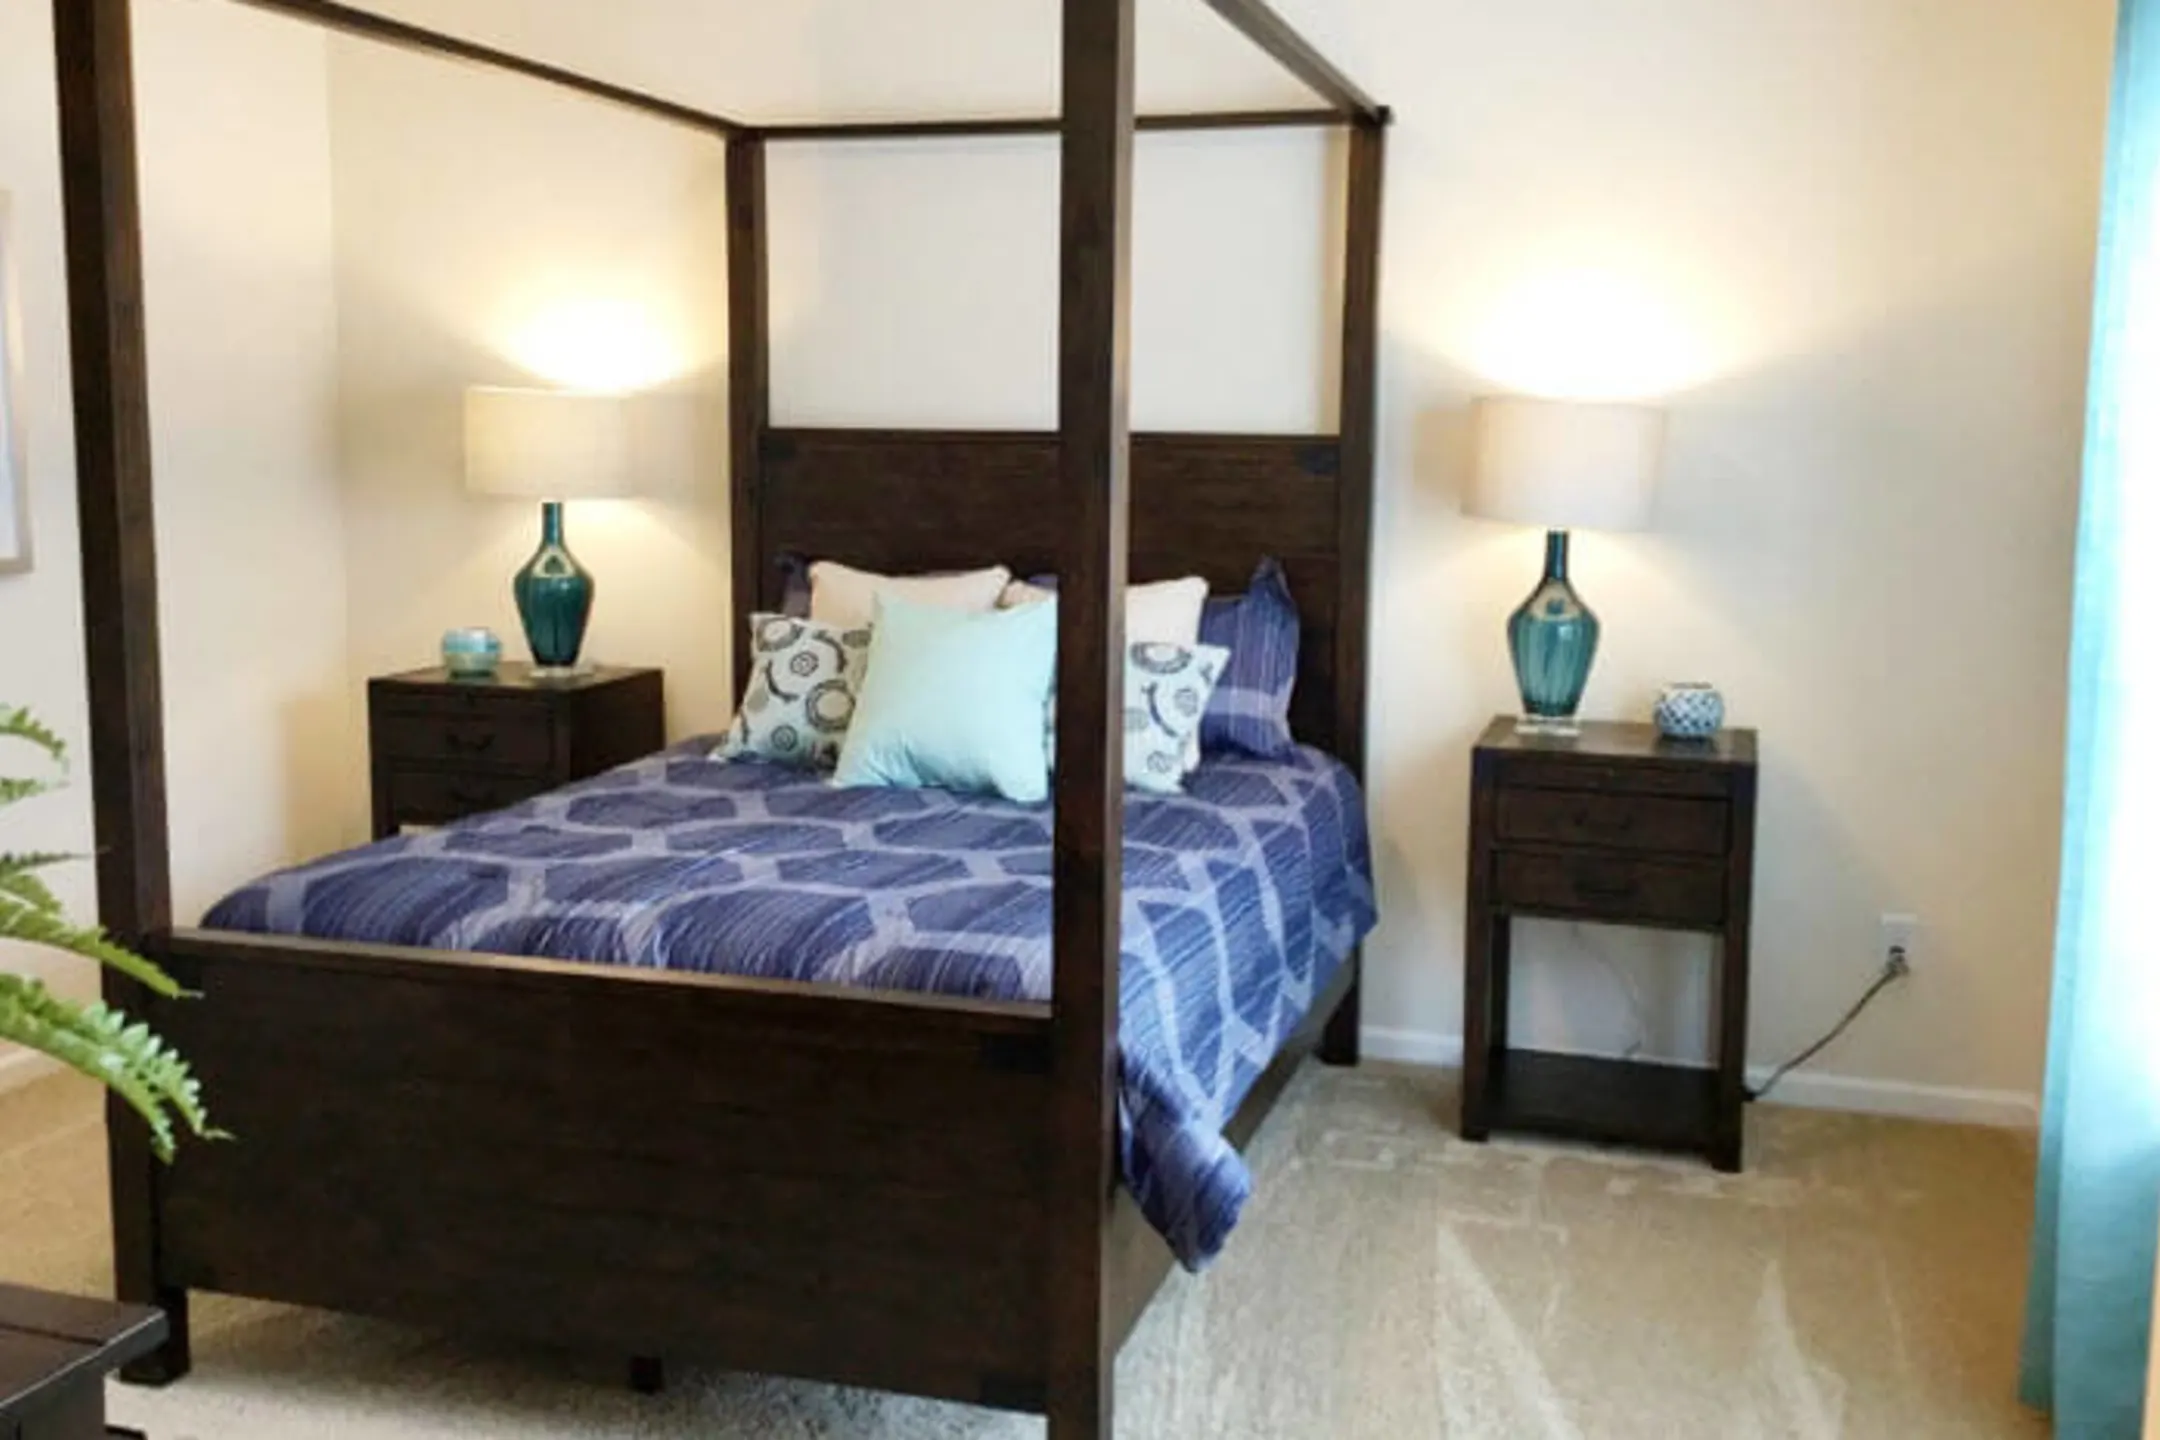 Bedroom - Palisades at The Park - Greenville, SC